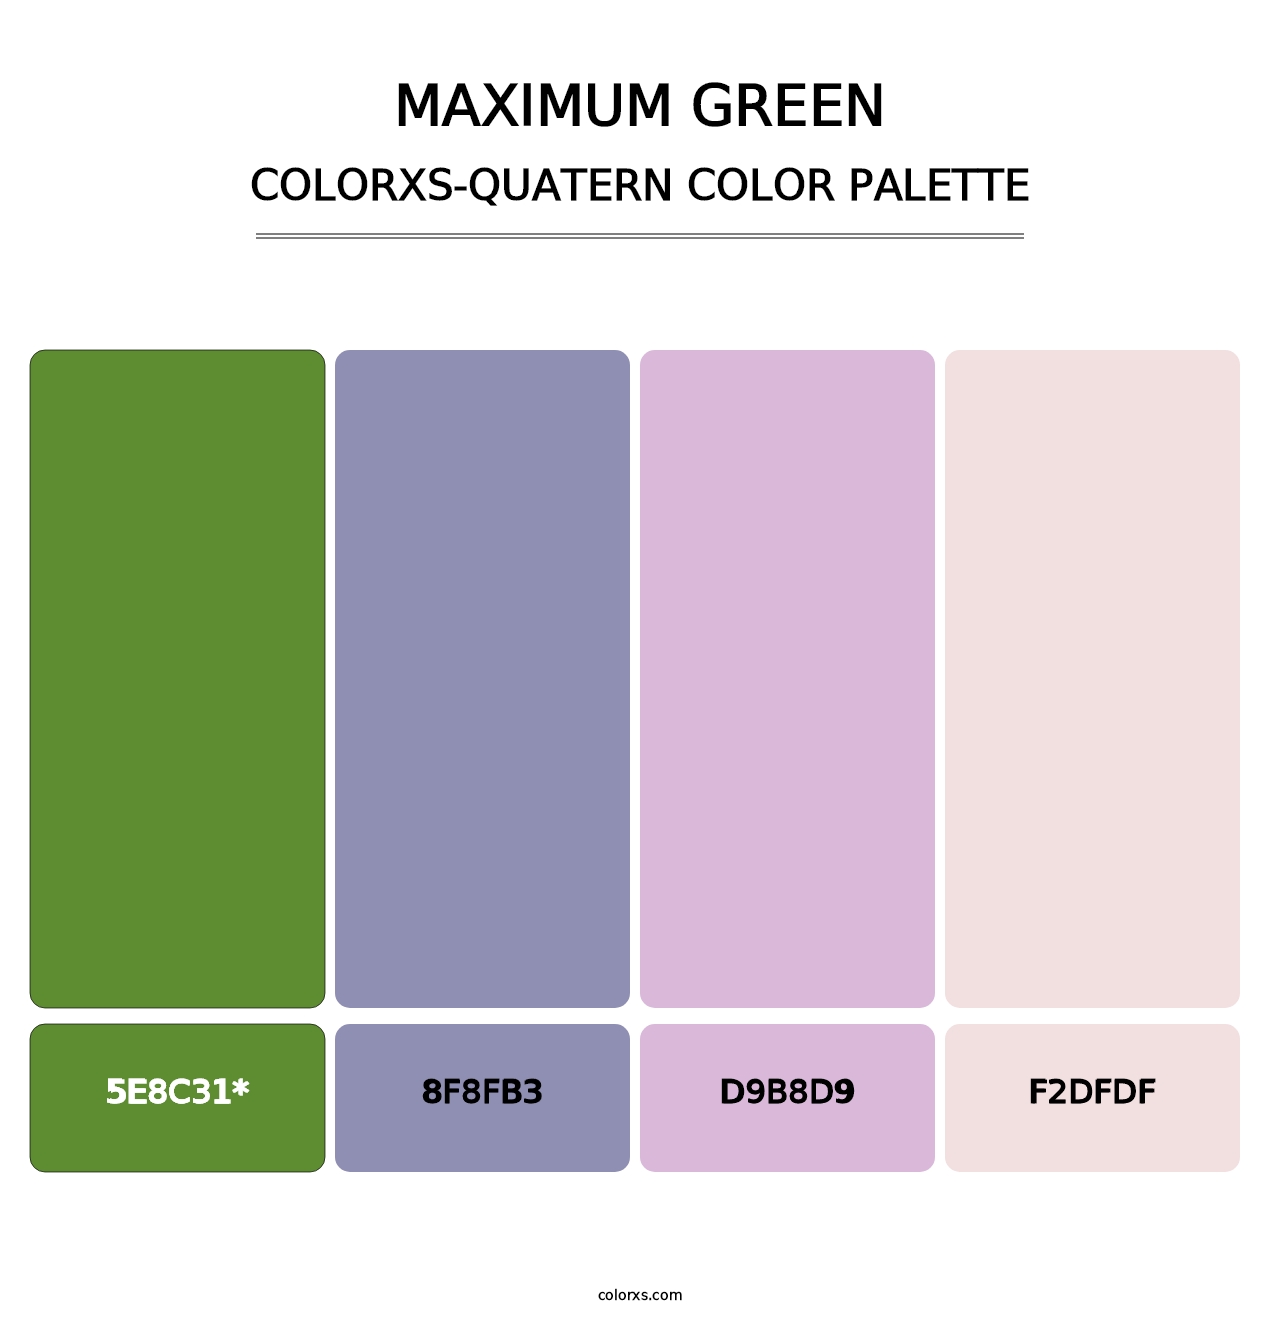 Maximum Green - Colorxs Quatern Palette